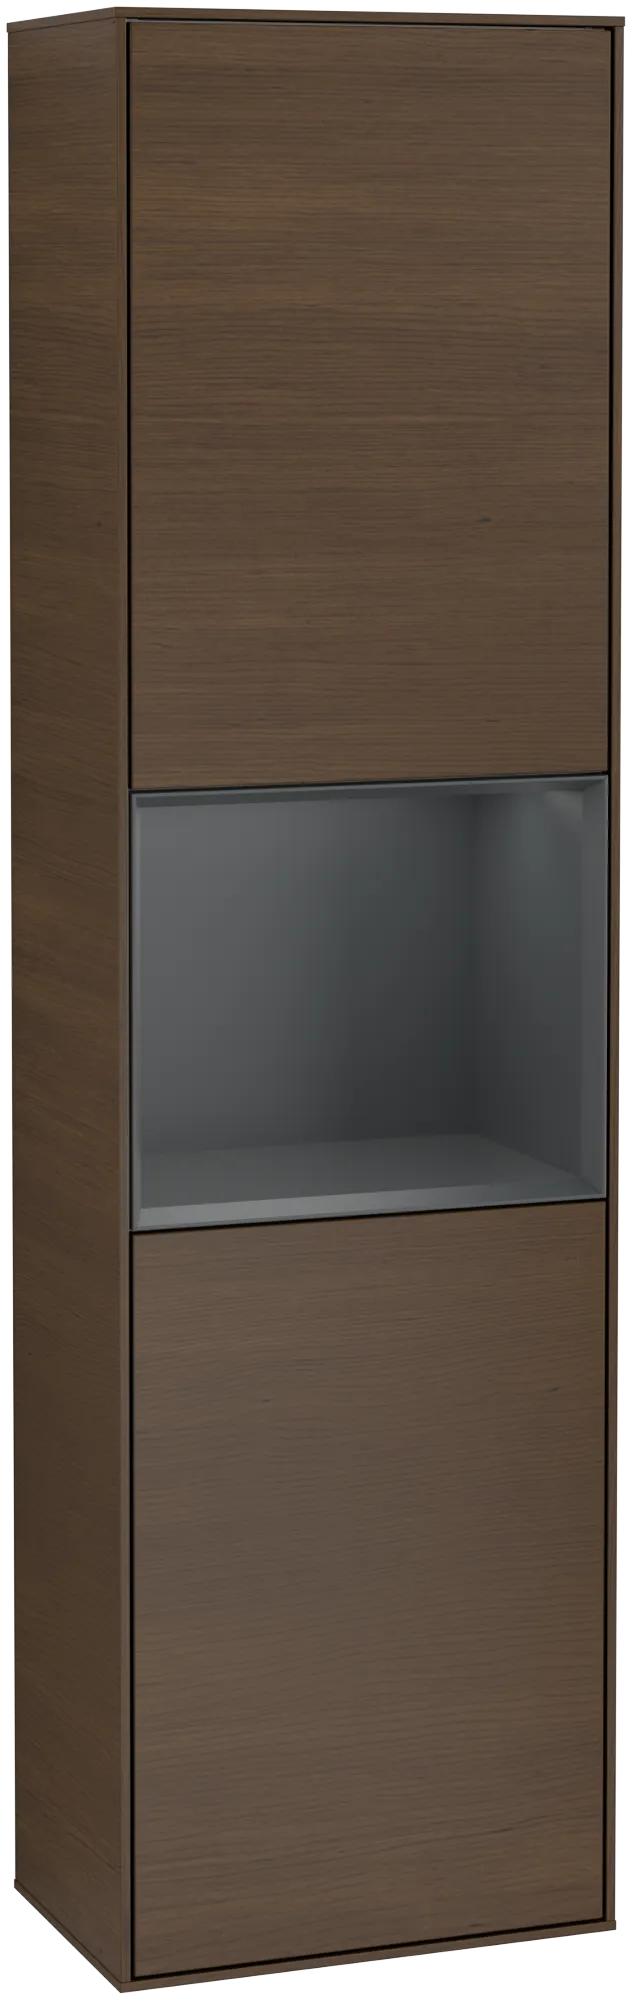 Picture of VILLEROY BOCH Finion Tall cabinet, with lighting, 2 doors, 418 x 1516 x 270 mm, Walnut Veneer / Midnight Blue Matt Lacquer #G470HGGN